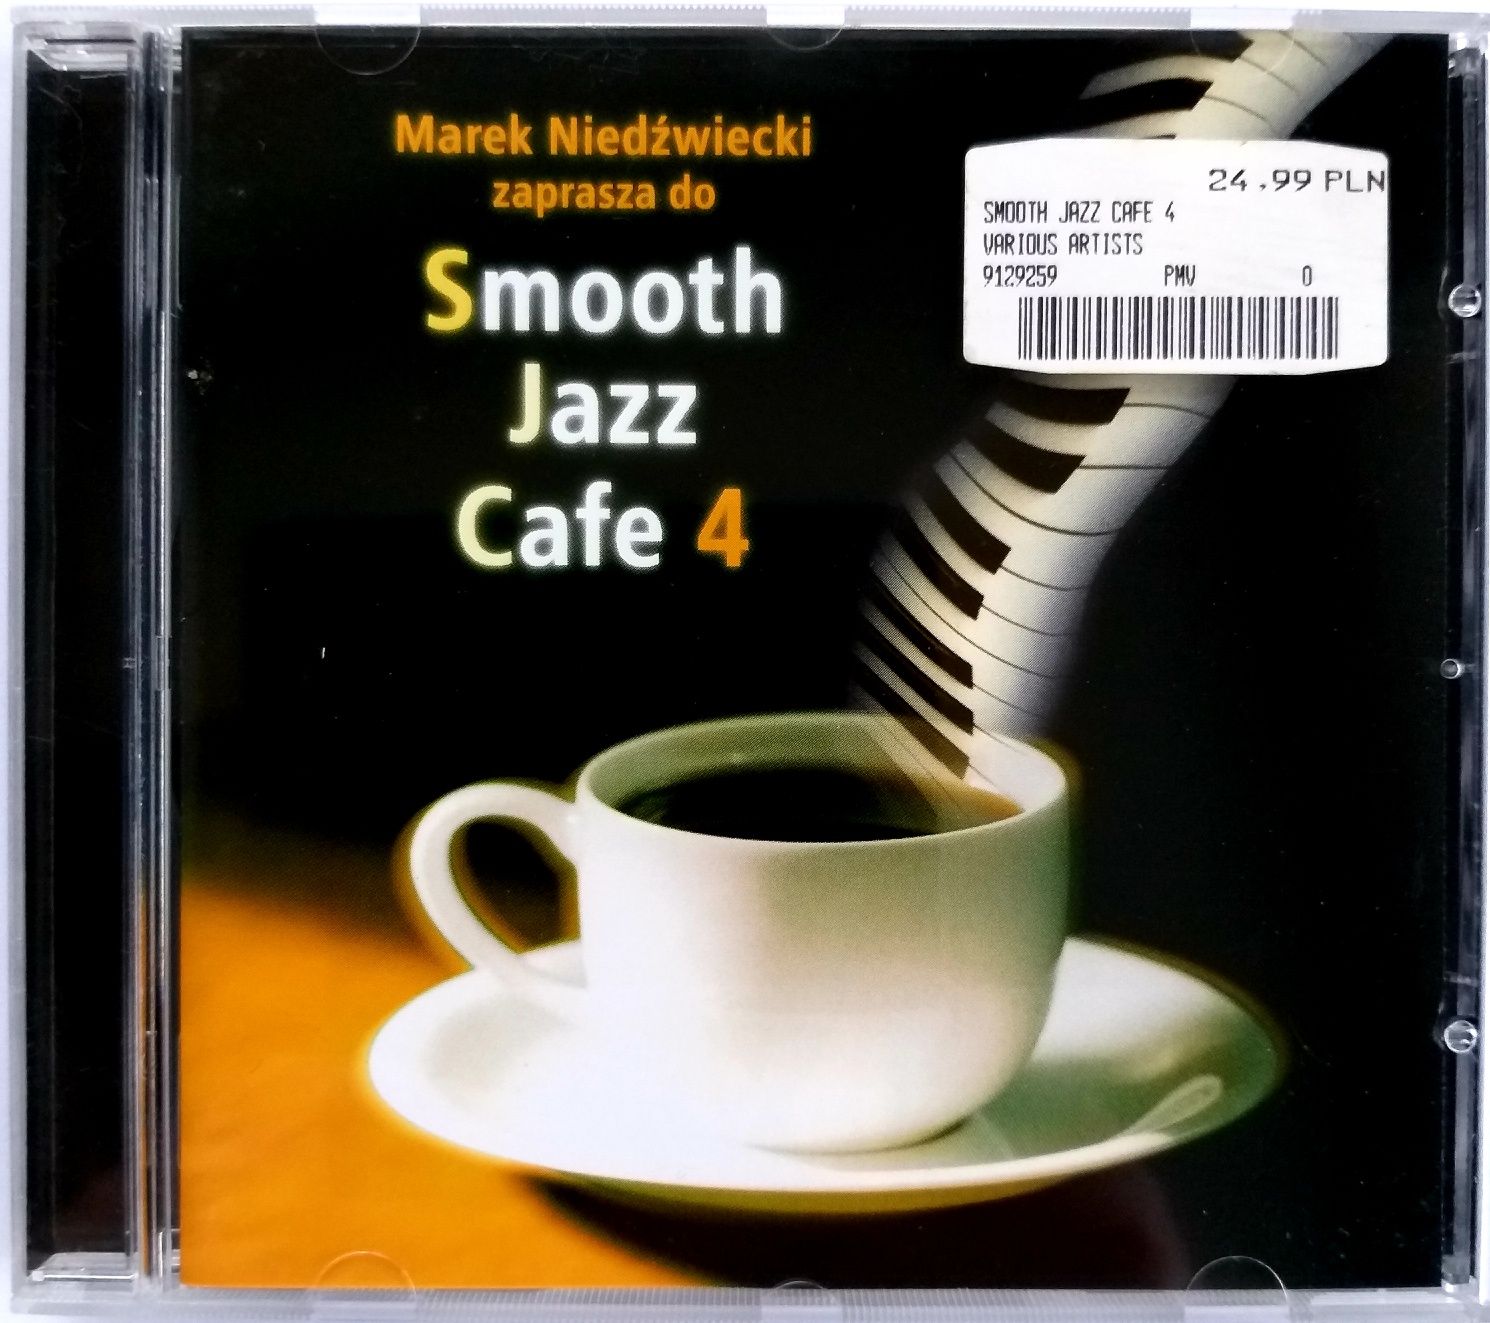 Smooth Jazz Cafe 4 2002r Woobie Doobie Miles Davis Kayah